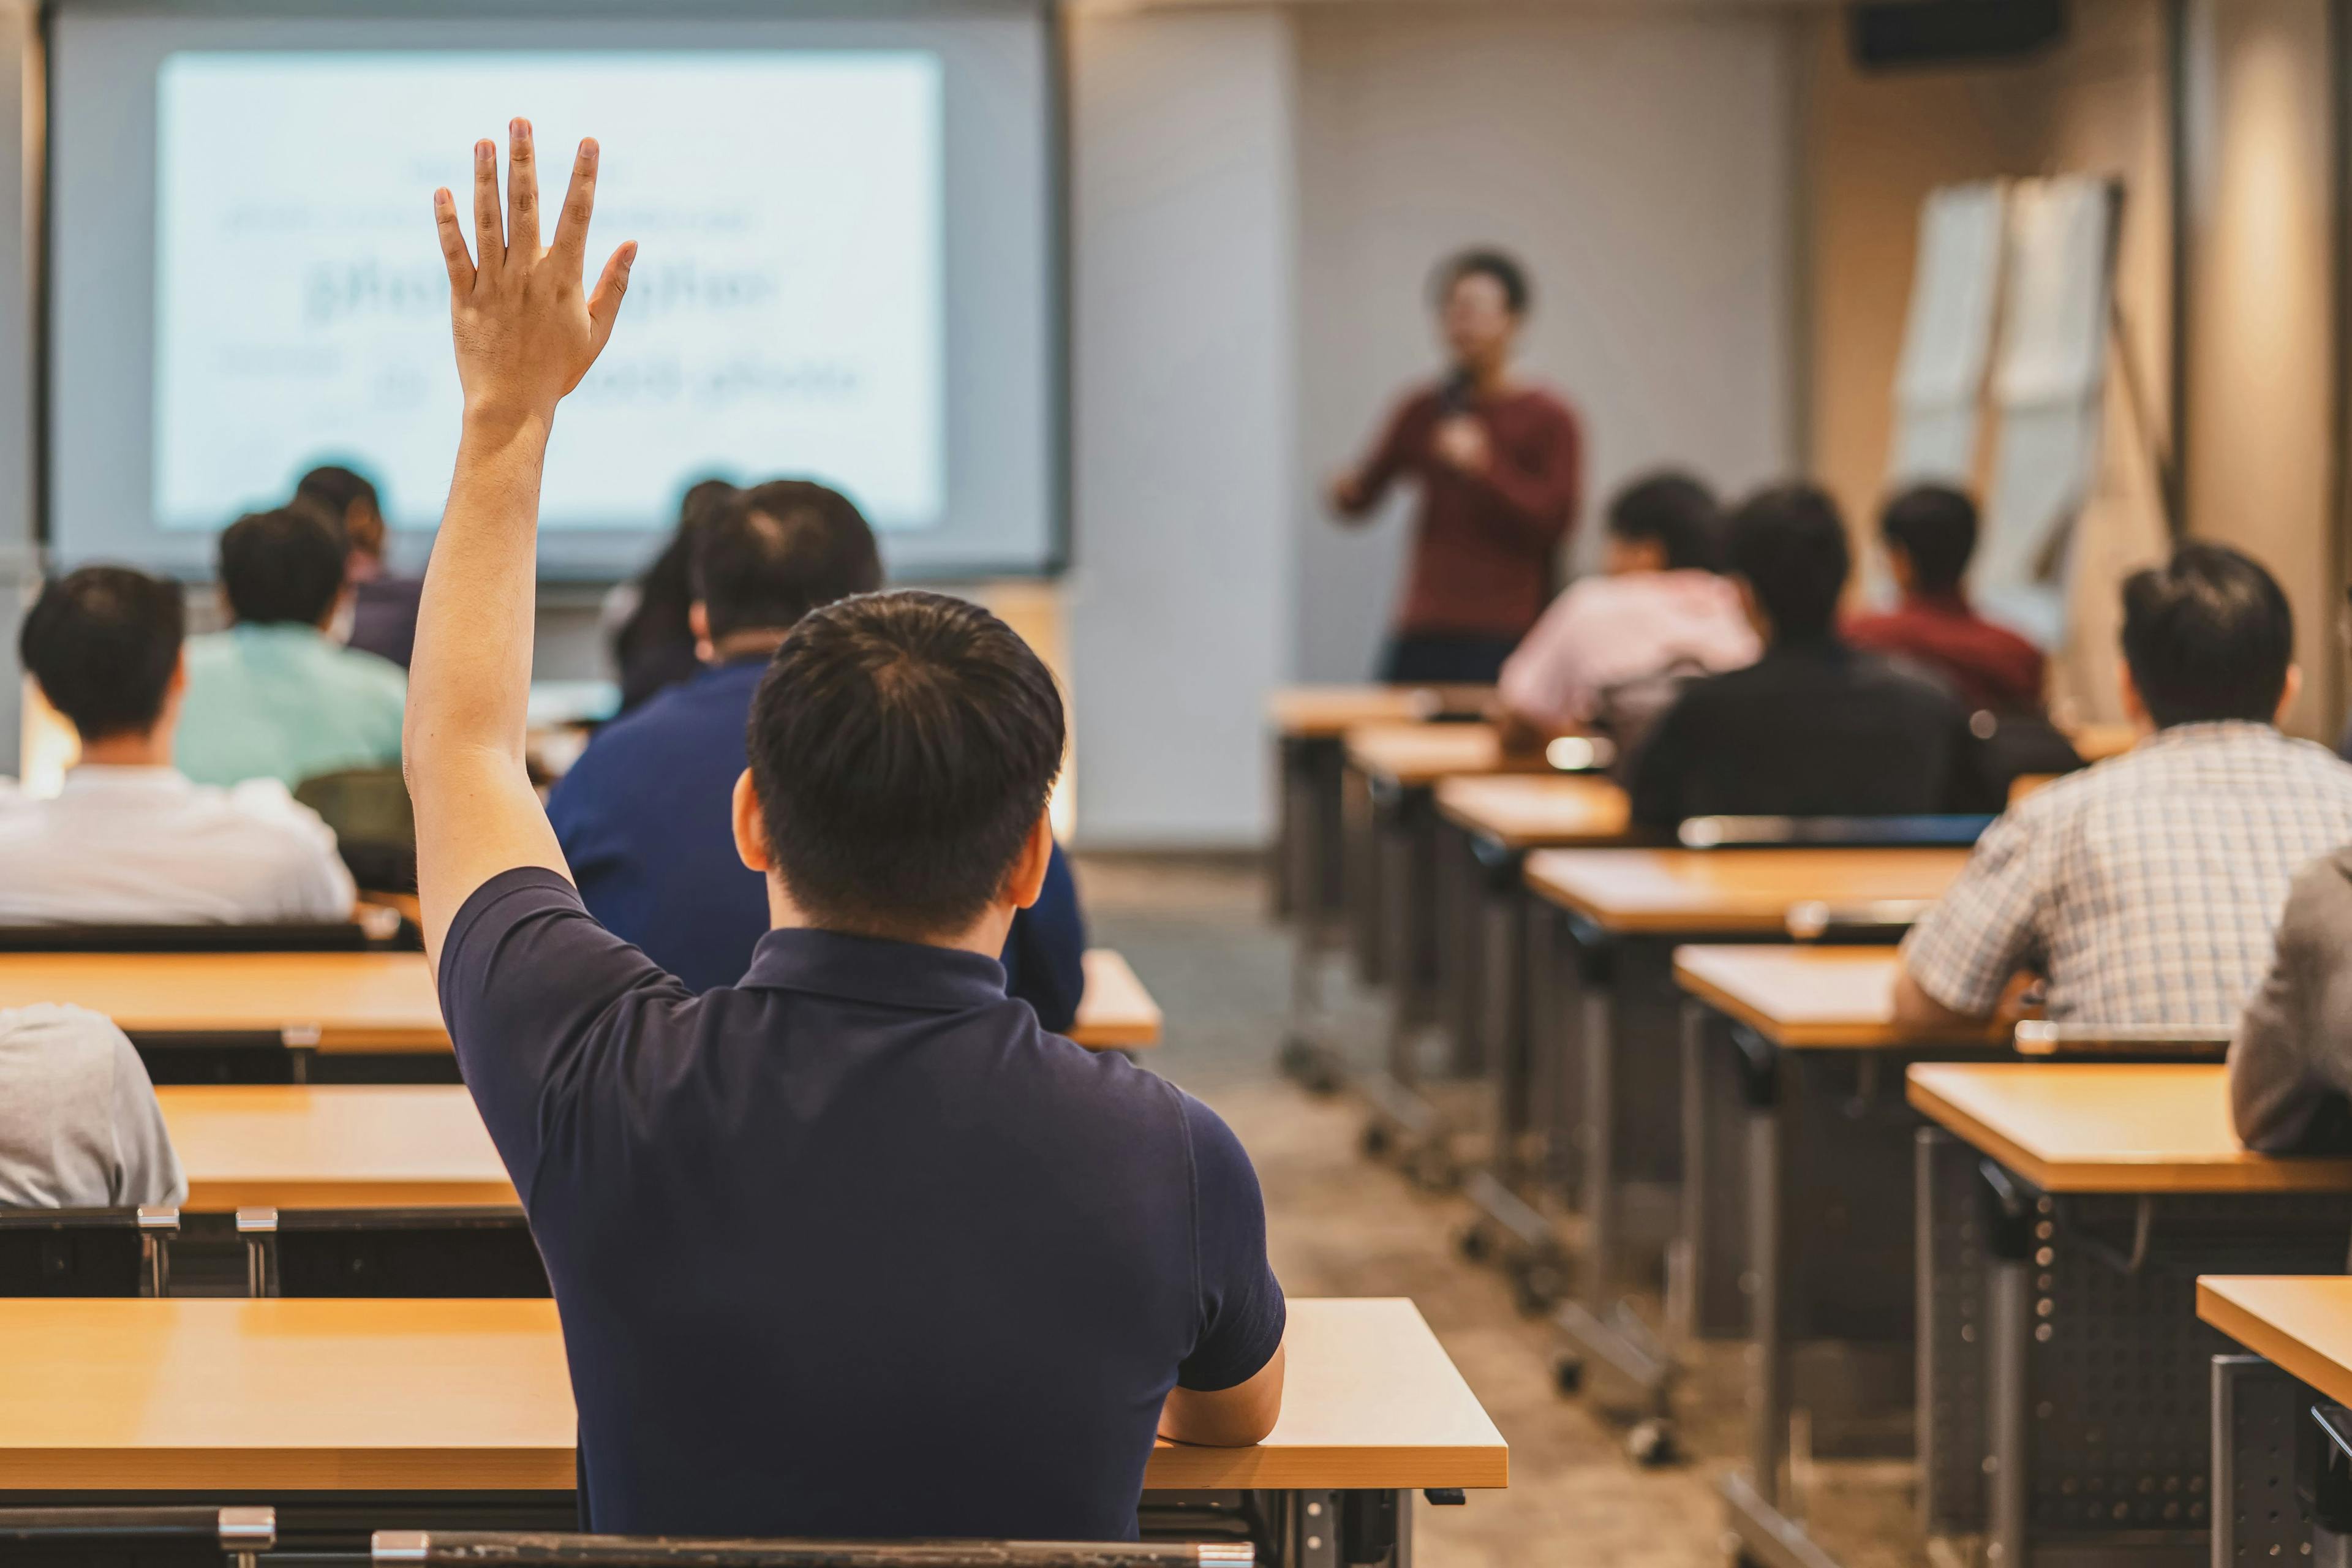 Student Raising Hand in University Classroom | image credit: THANANIT - stock.adobe.com